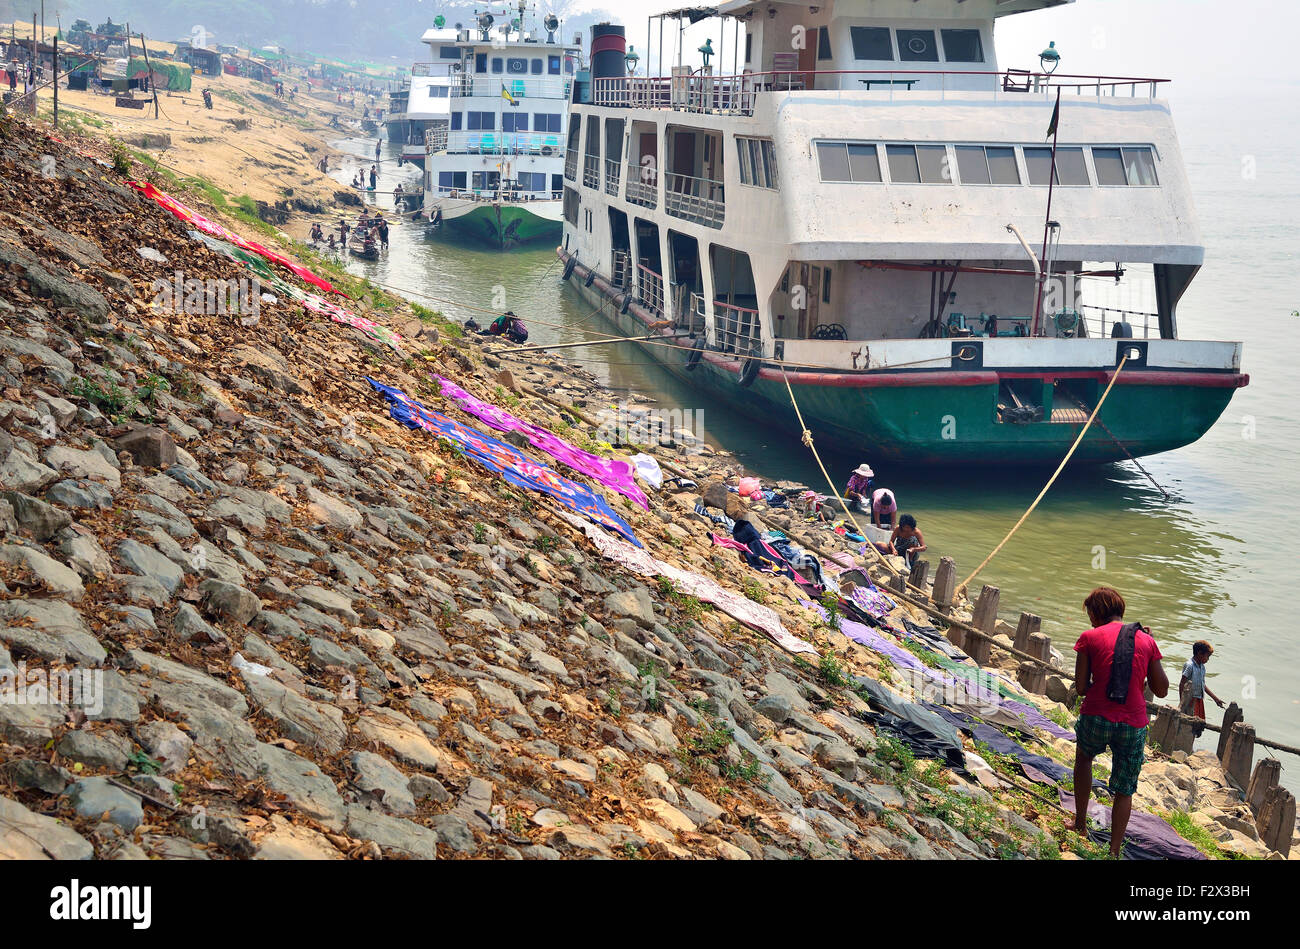 Boats moored and laundry drying on the banks of the Irrawaddy/ Ayeyarwady River, at Mandalay, Myanmar (Burma) Stock Photo